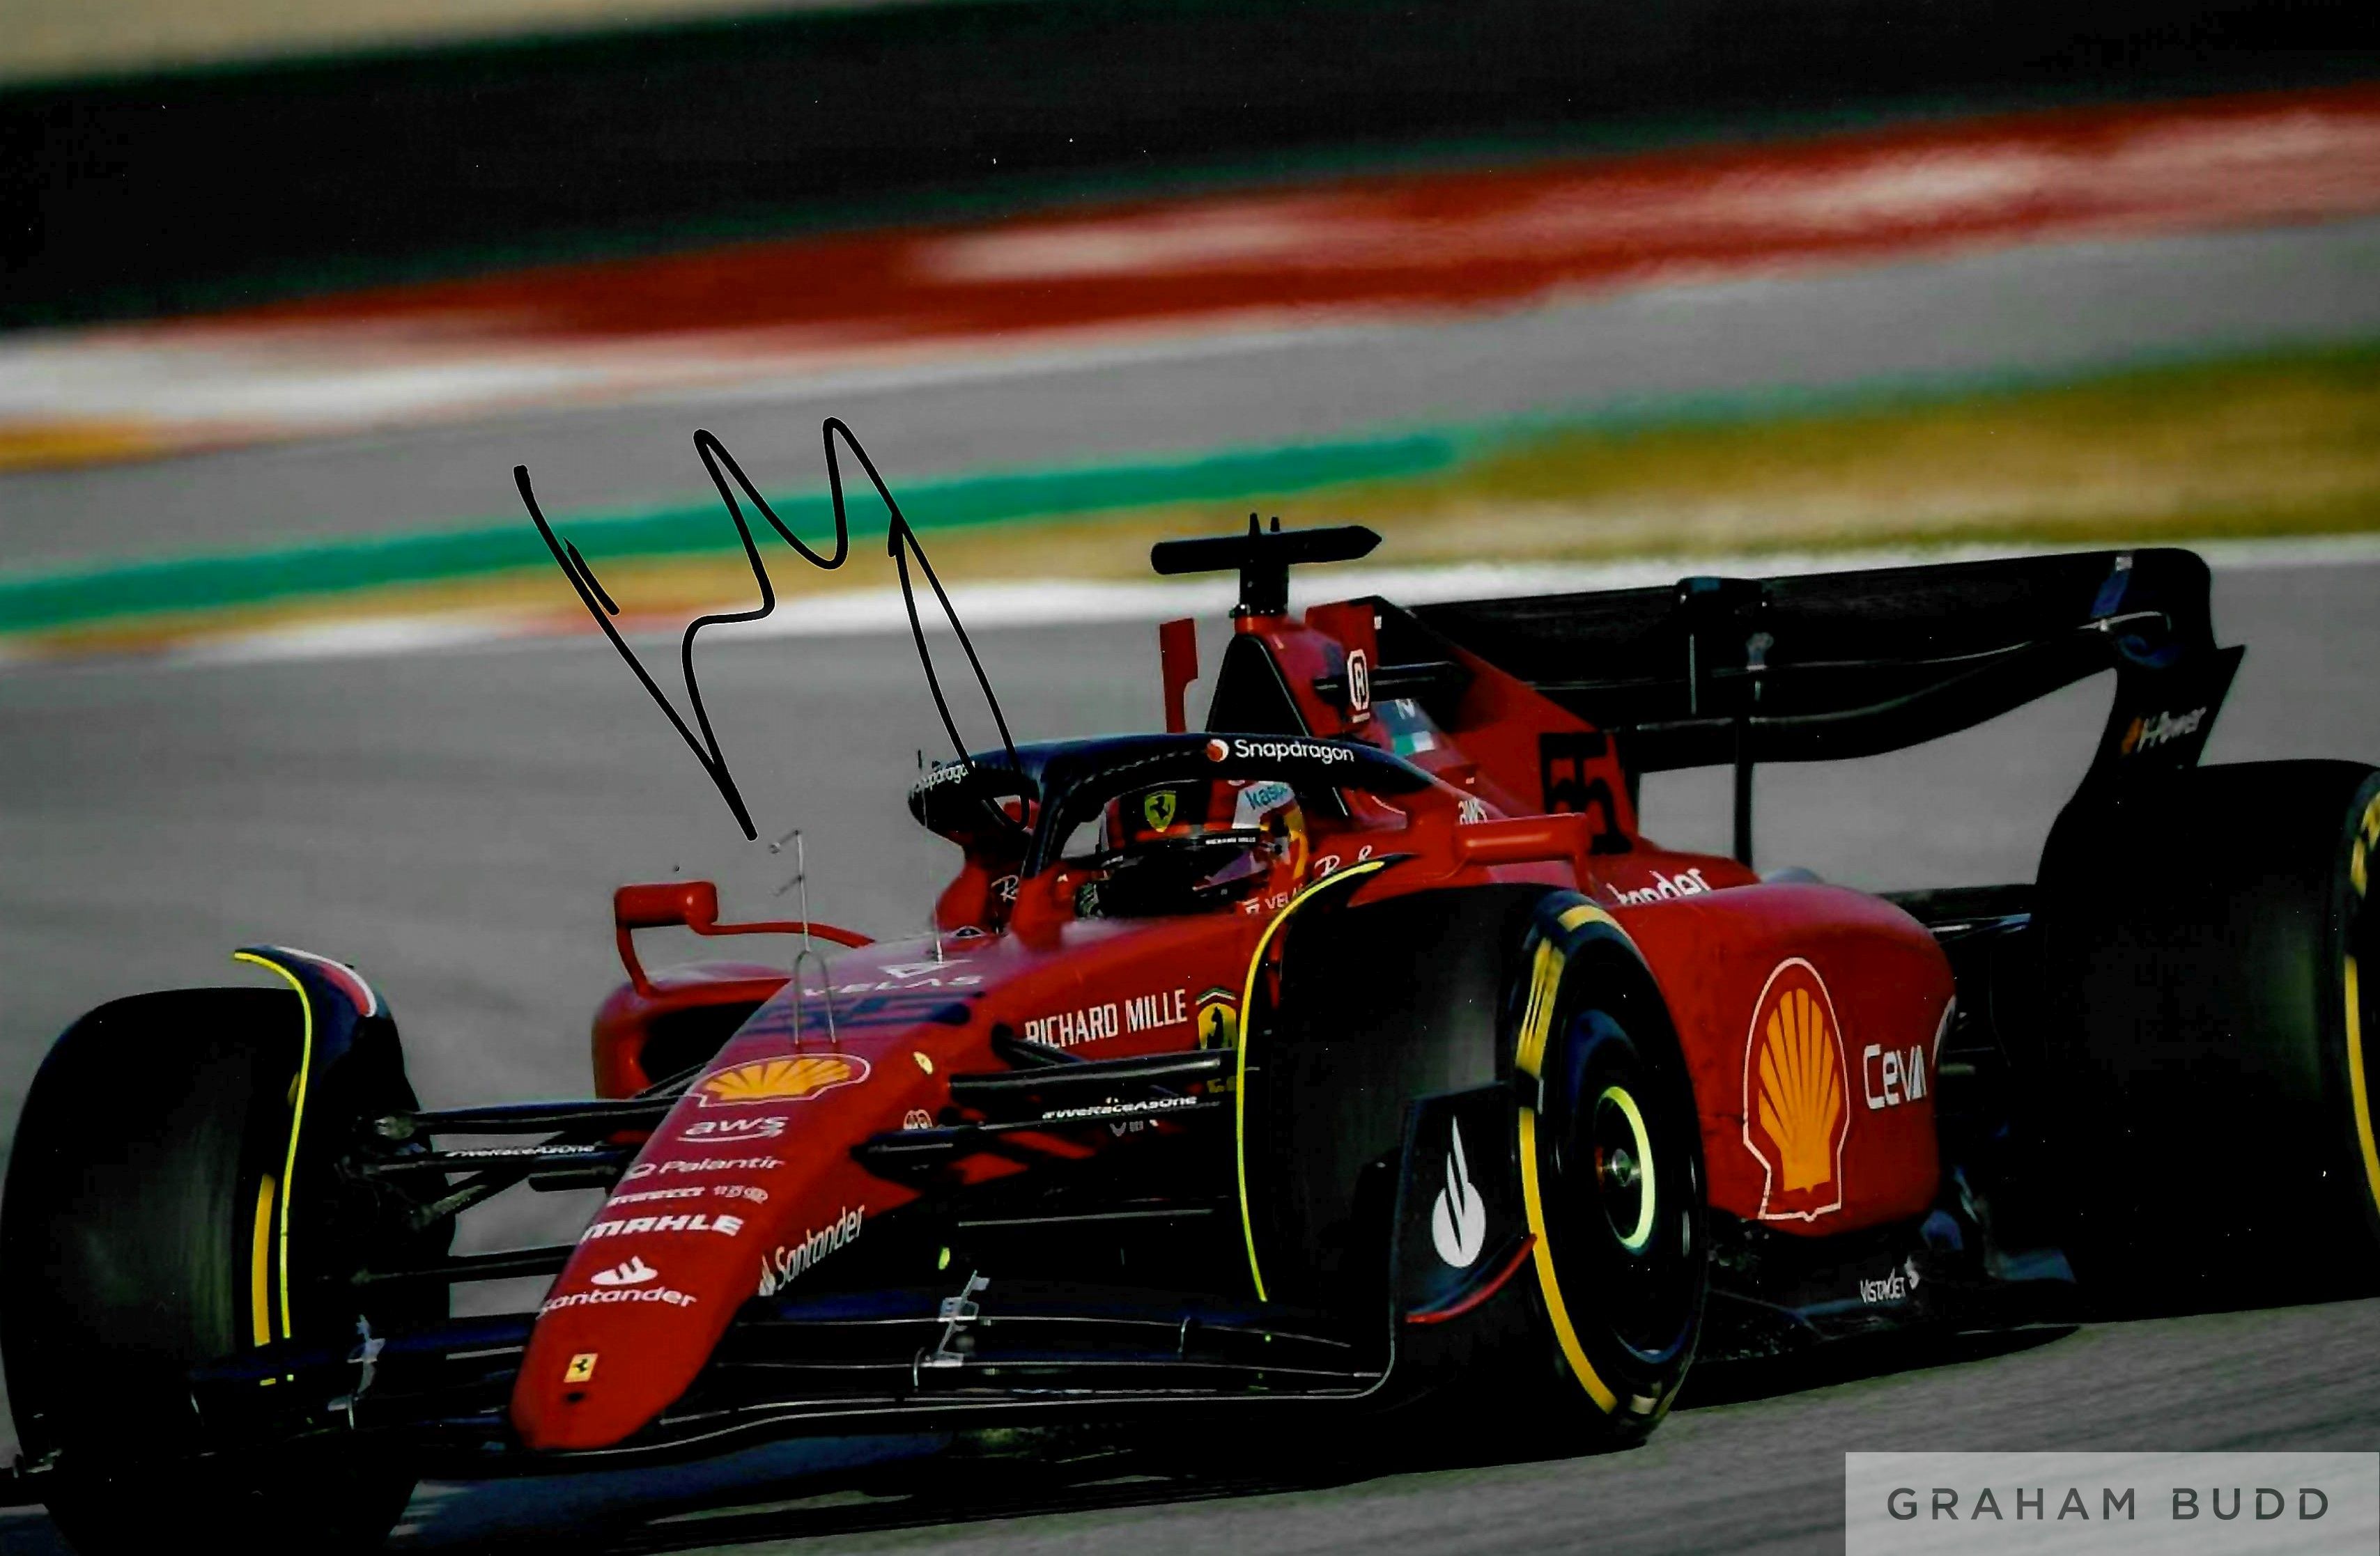 Carlos Sainz (Spain) signed Ferrari 2022 collection - Image 2 of 2